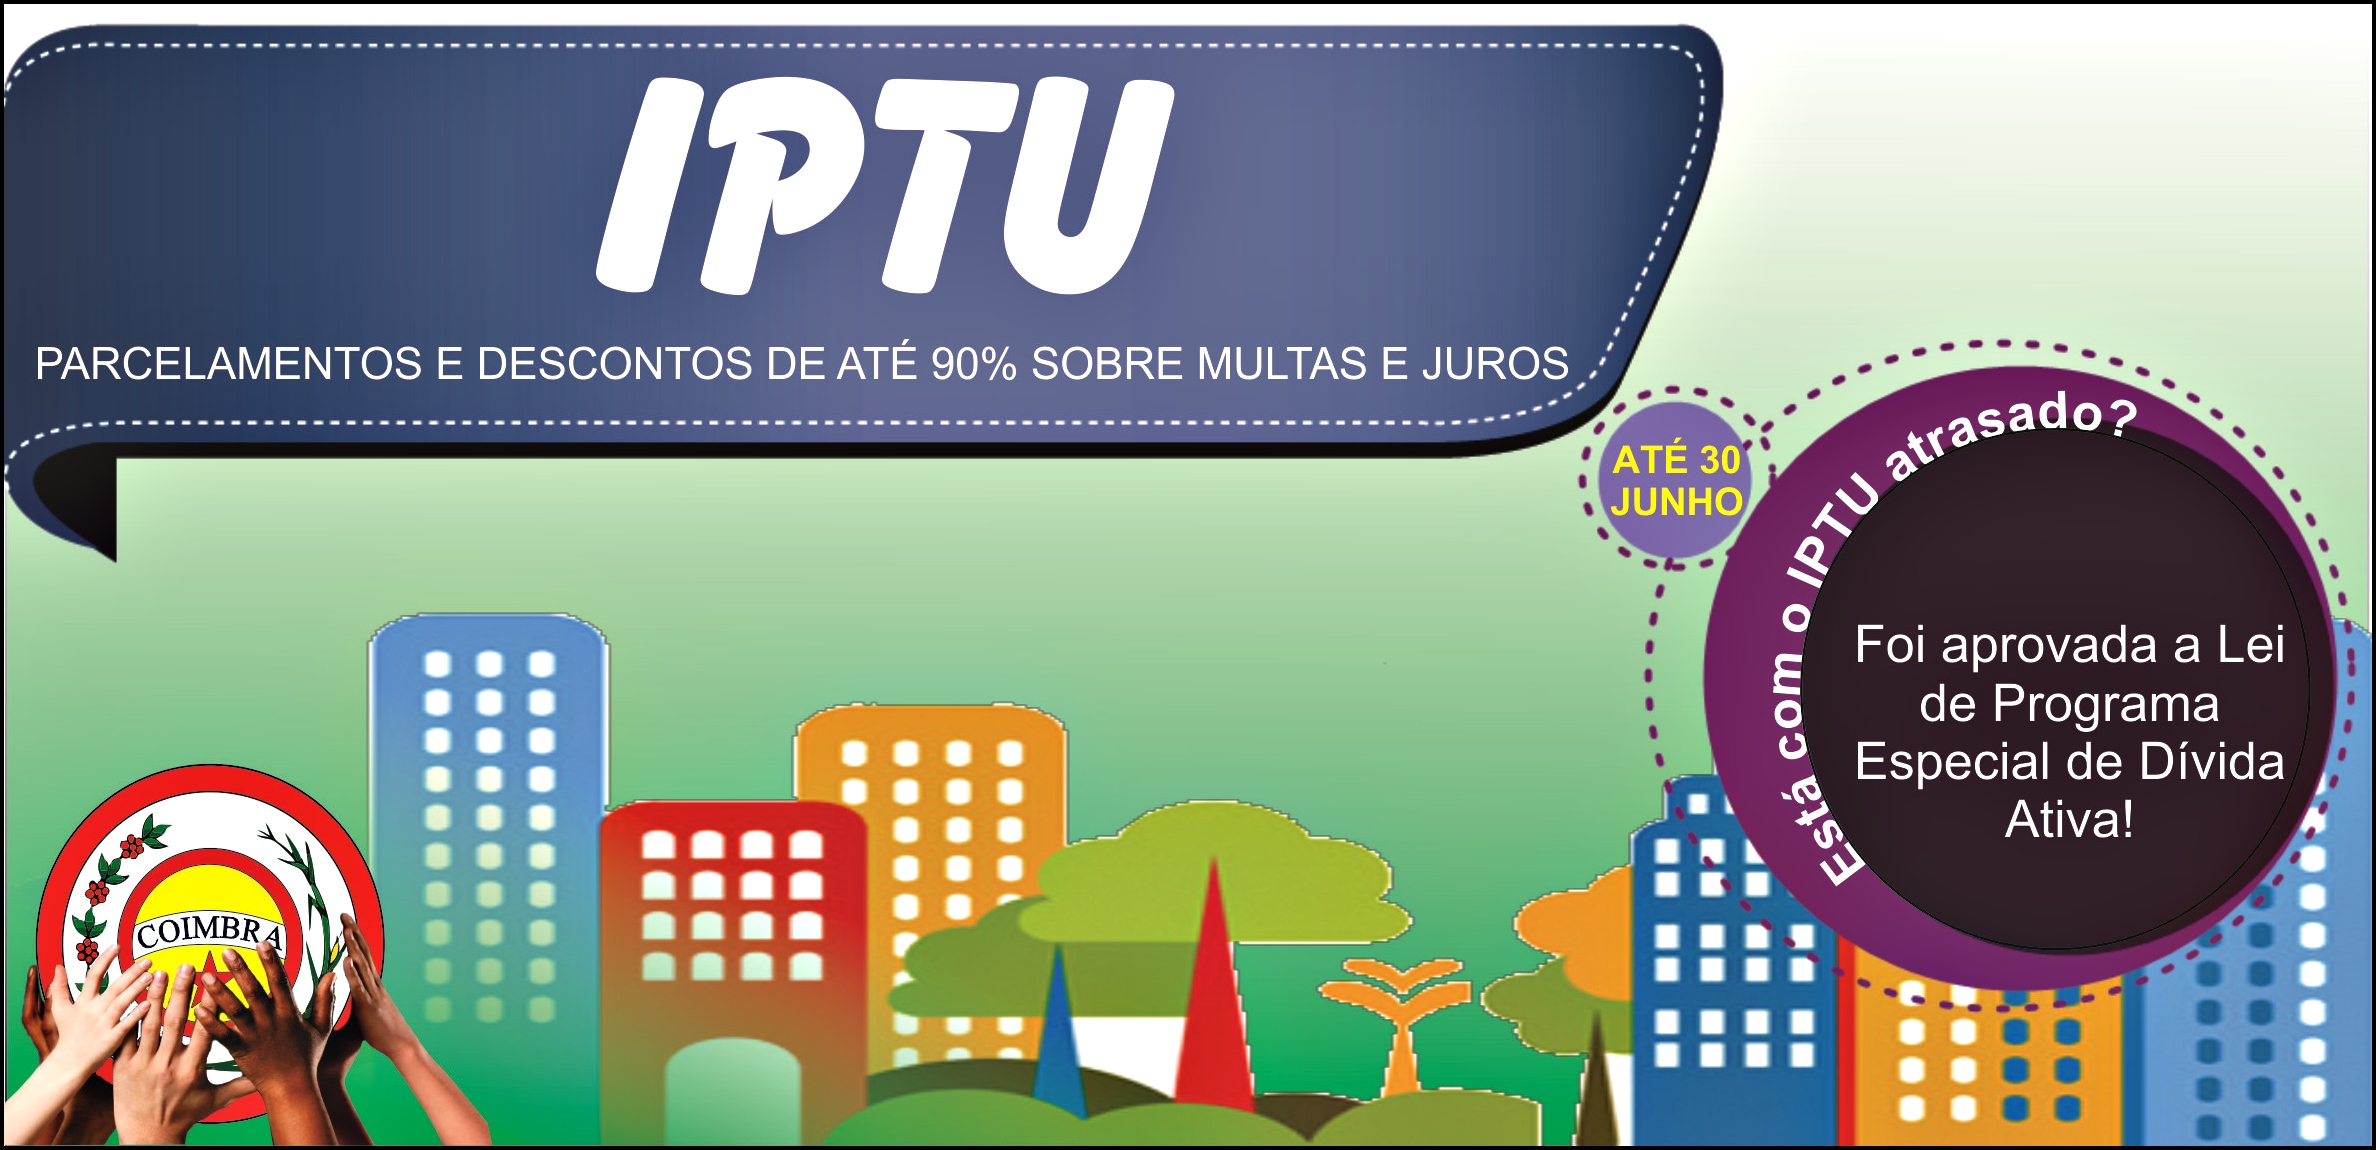 IPTU: Lei de Programa Especial de Dívida Ativa